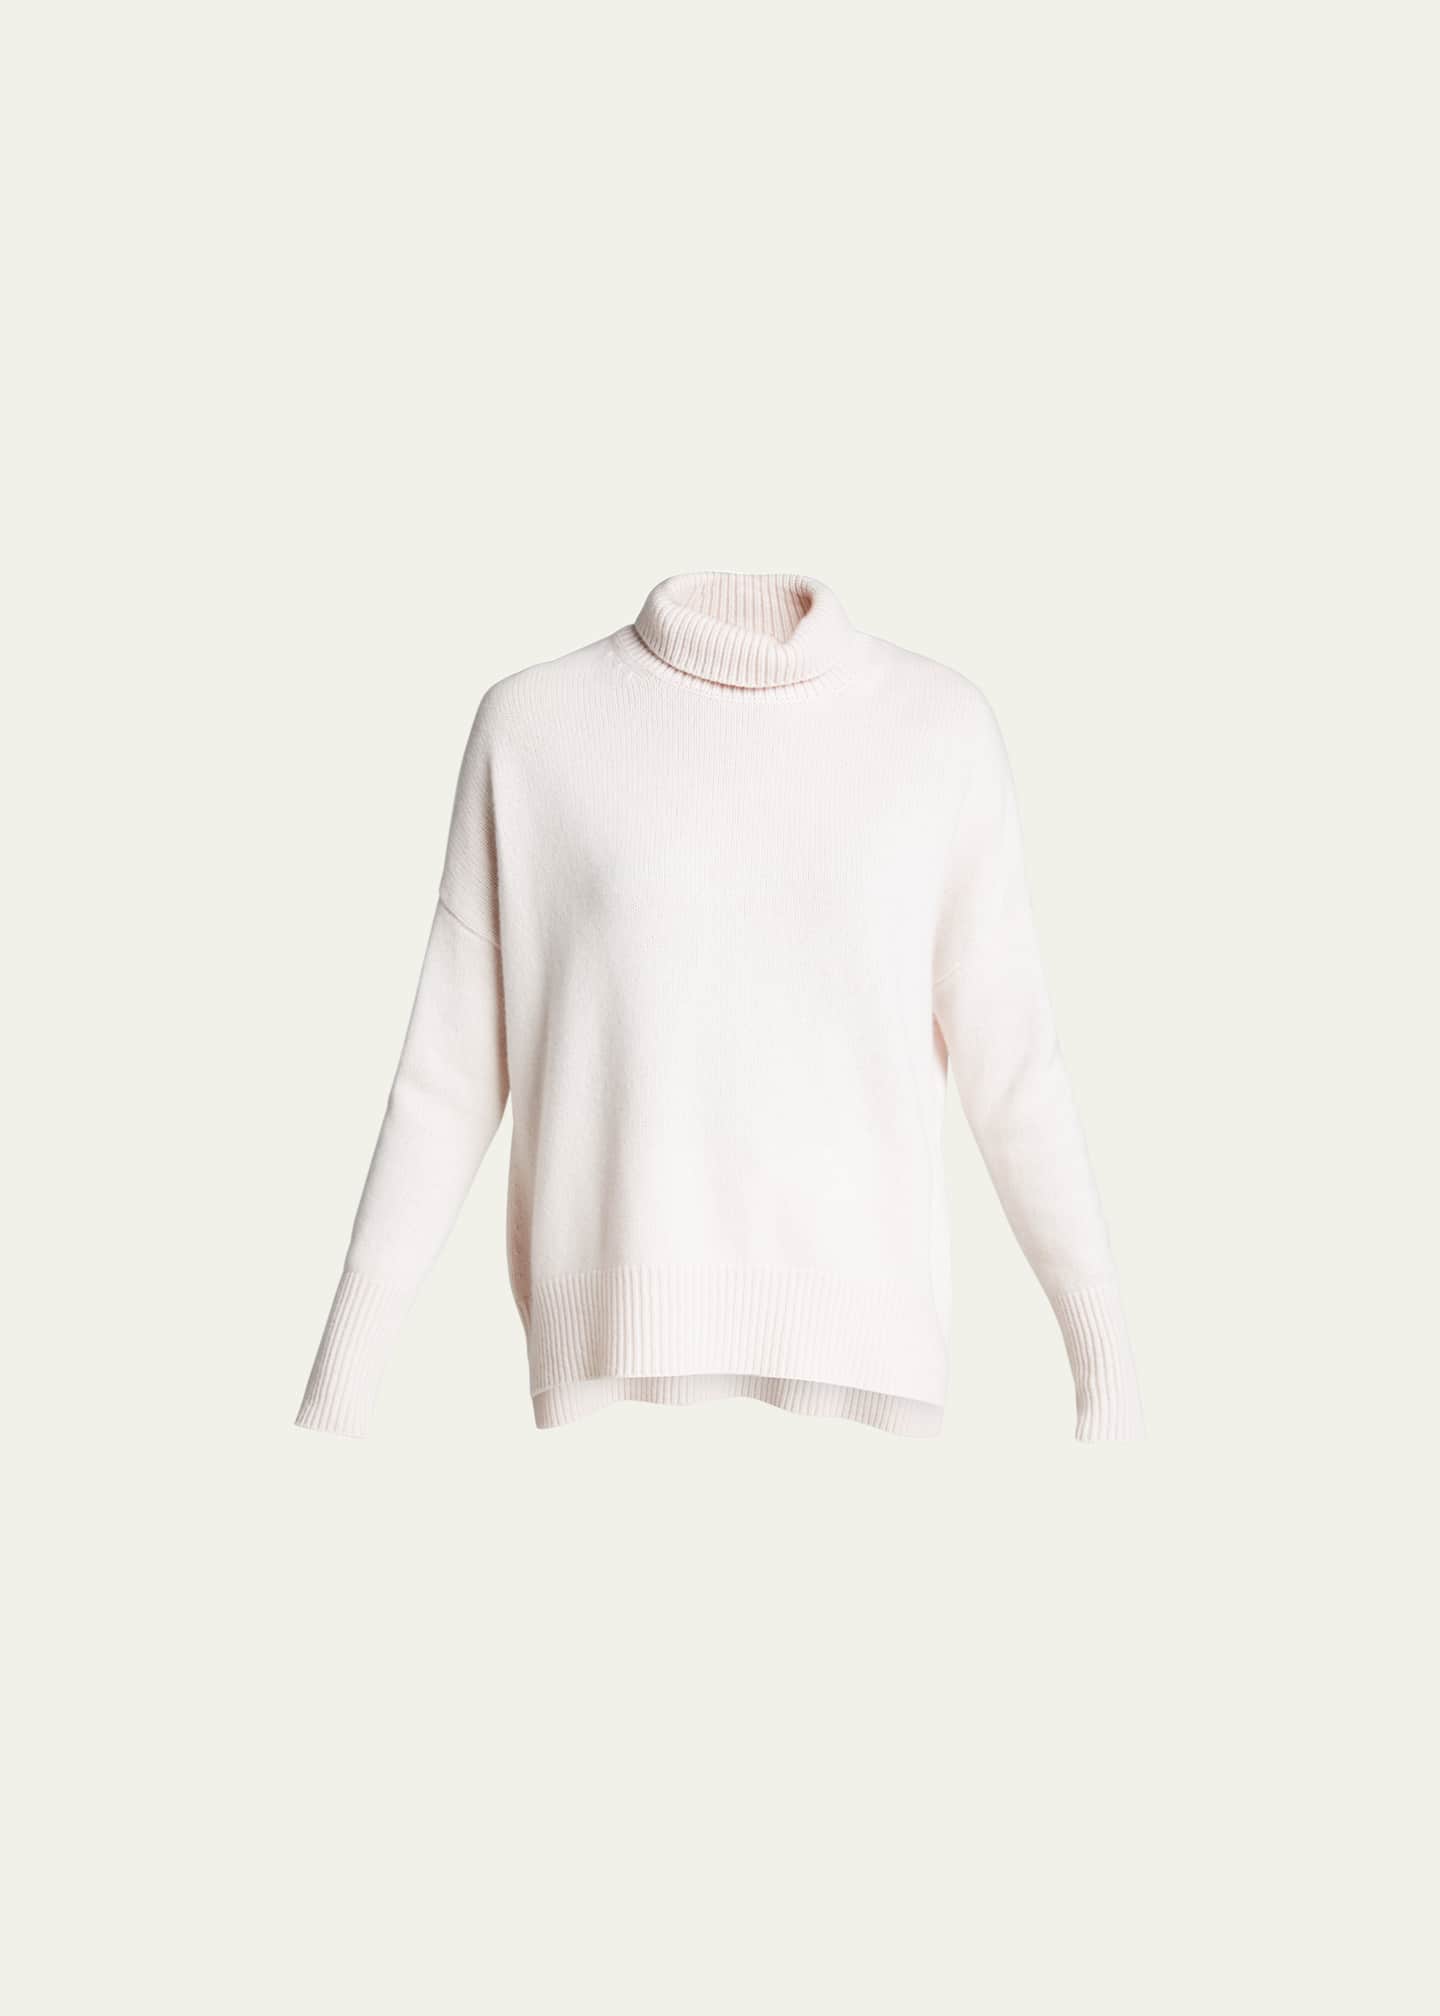 Lisa Yang Heidi Cashmere Turtleneck Sweater - Bergdorf Goodman